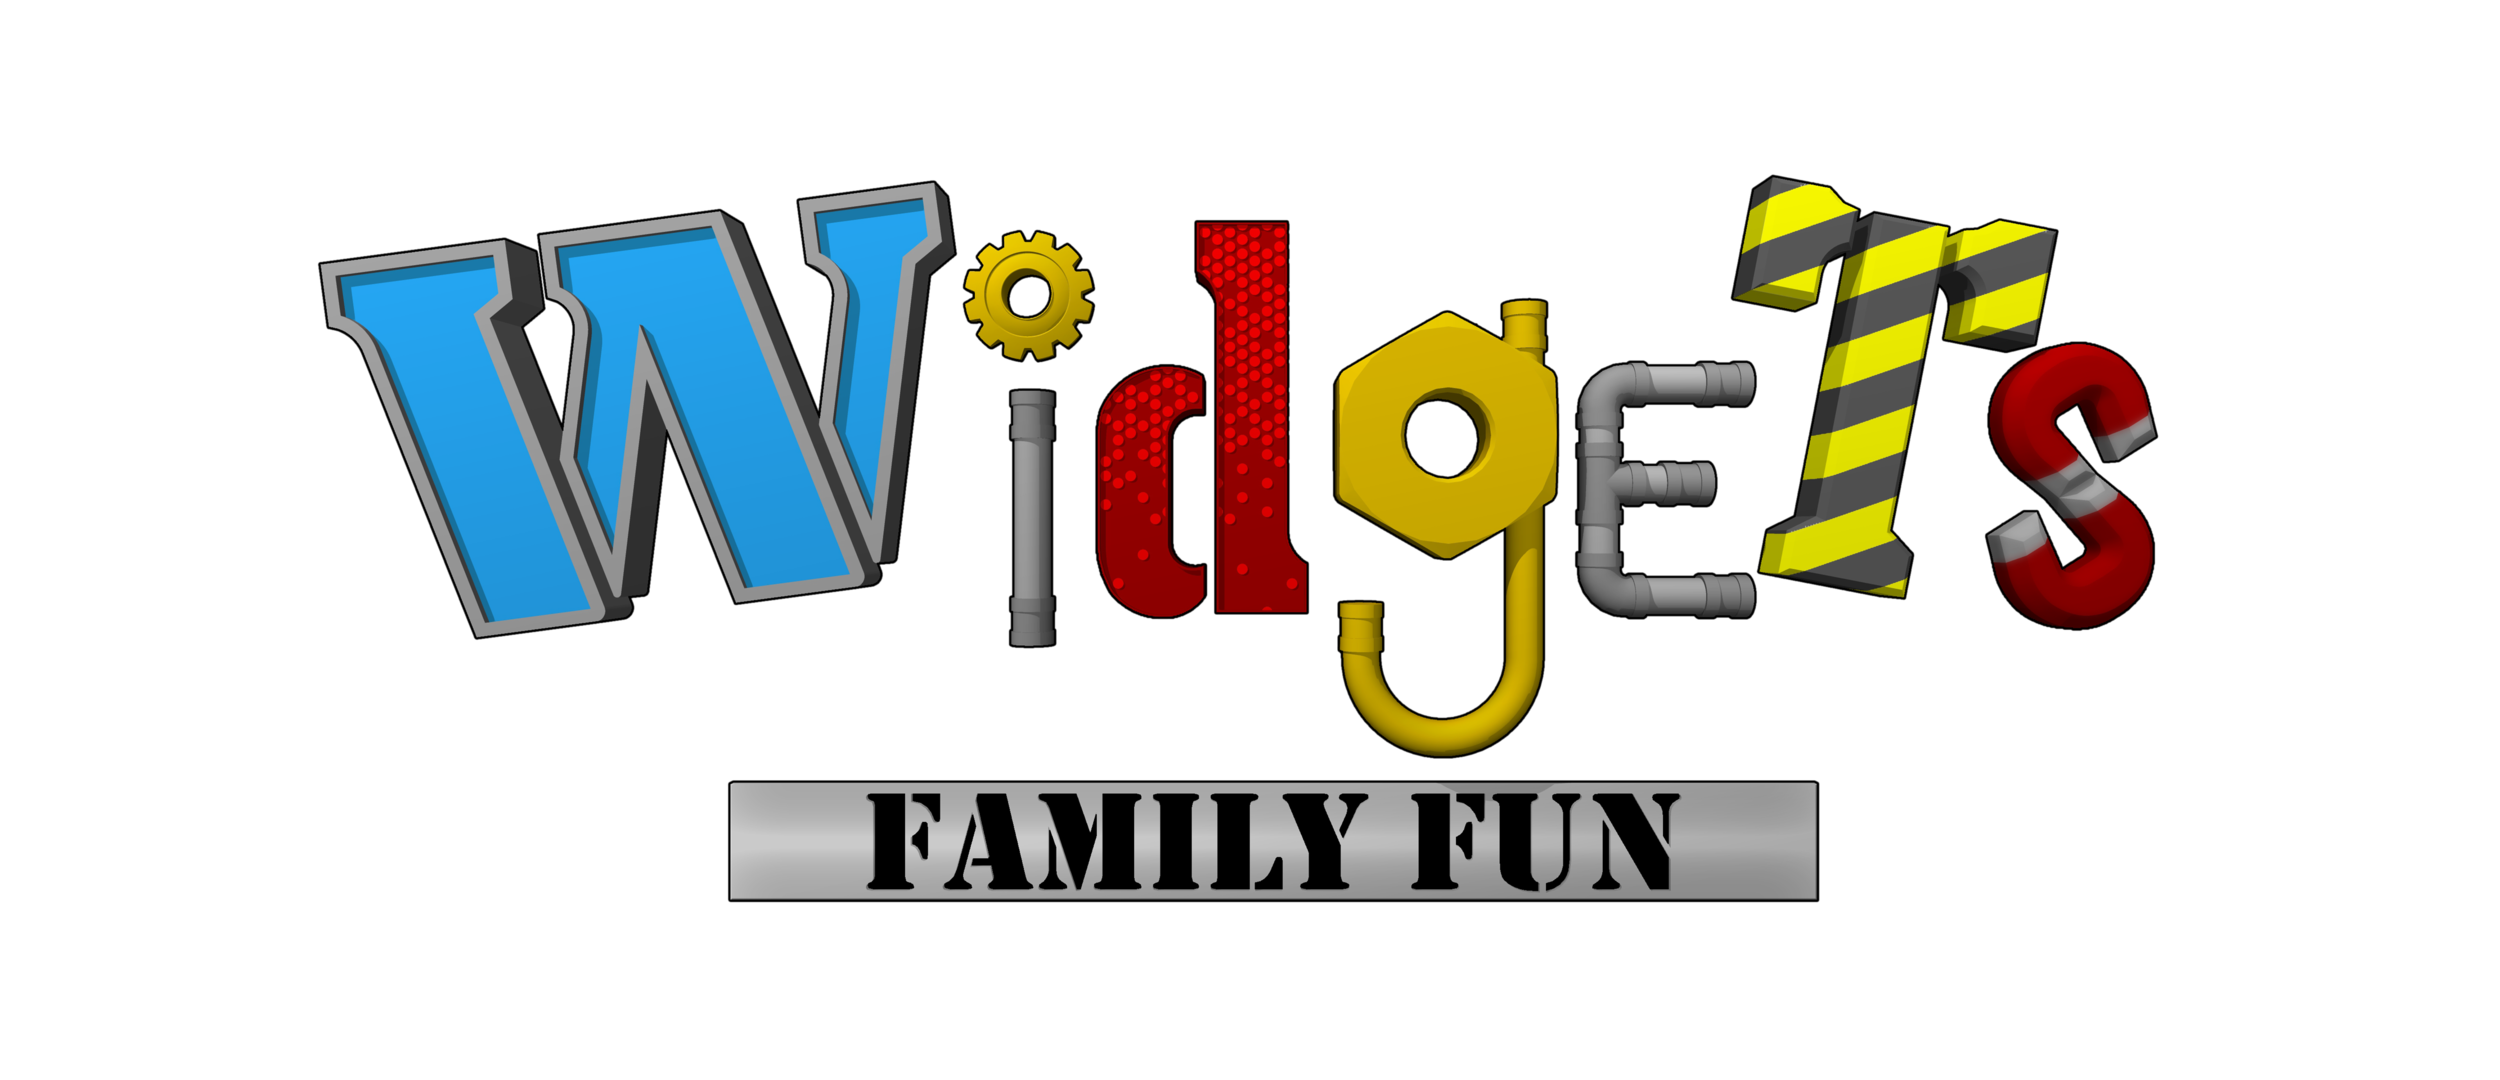 WidgetsLogo_web.png